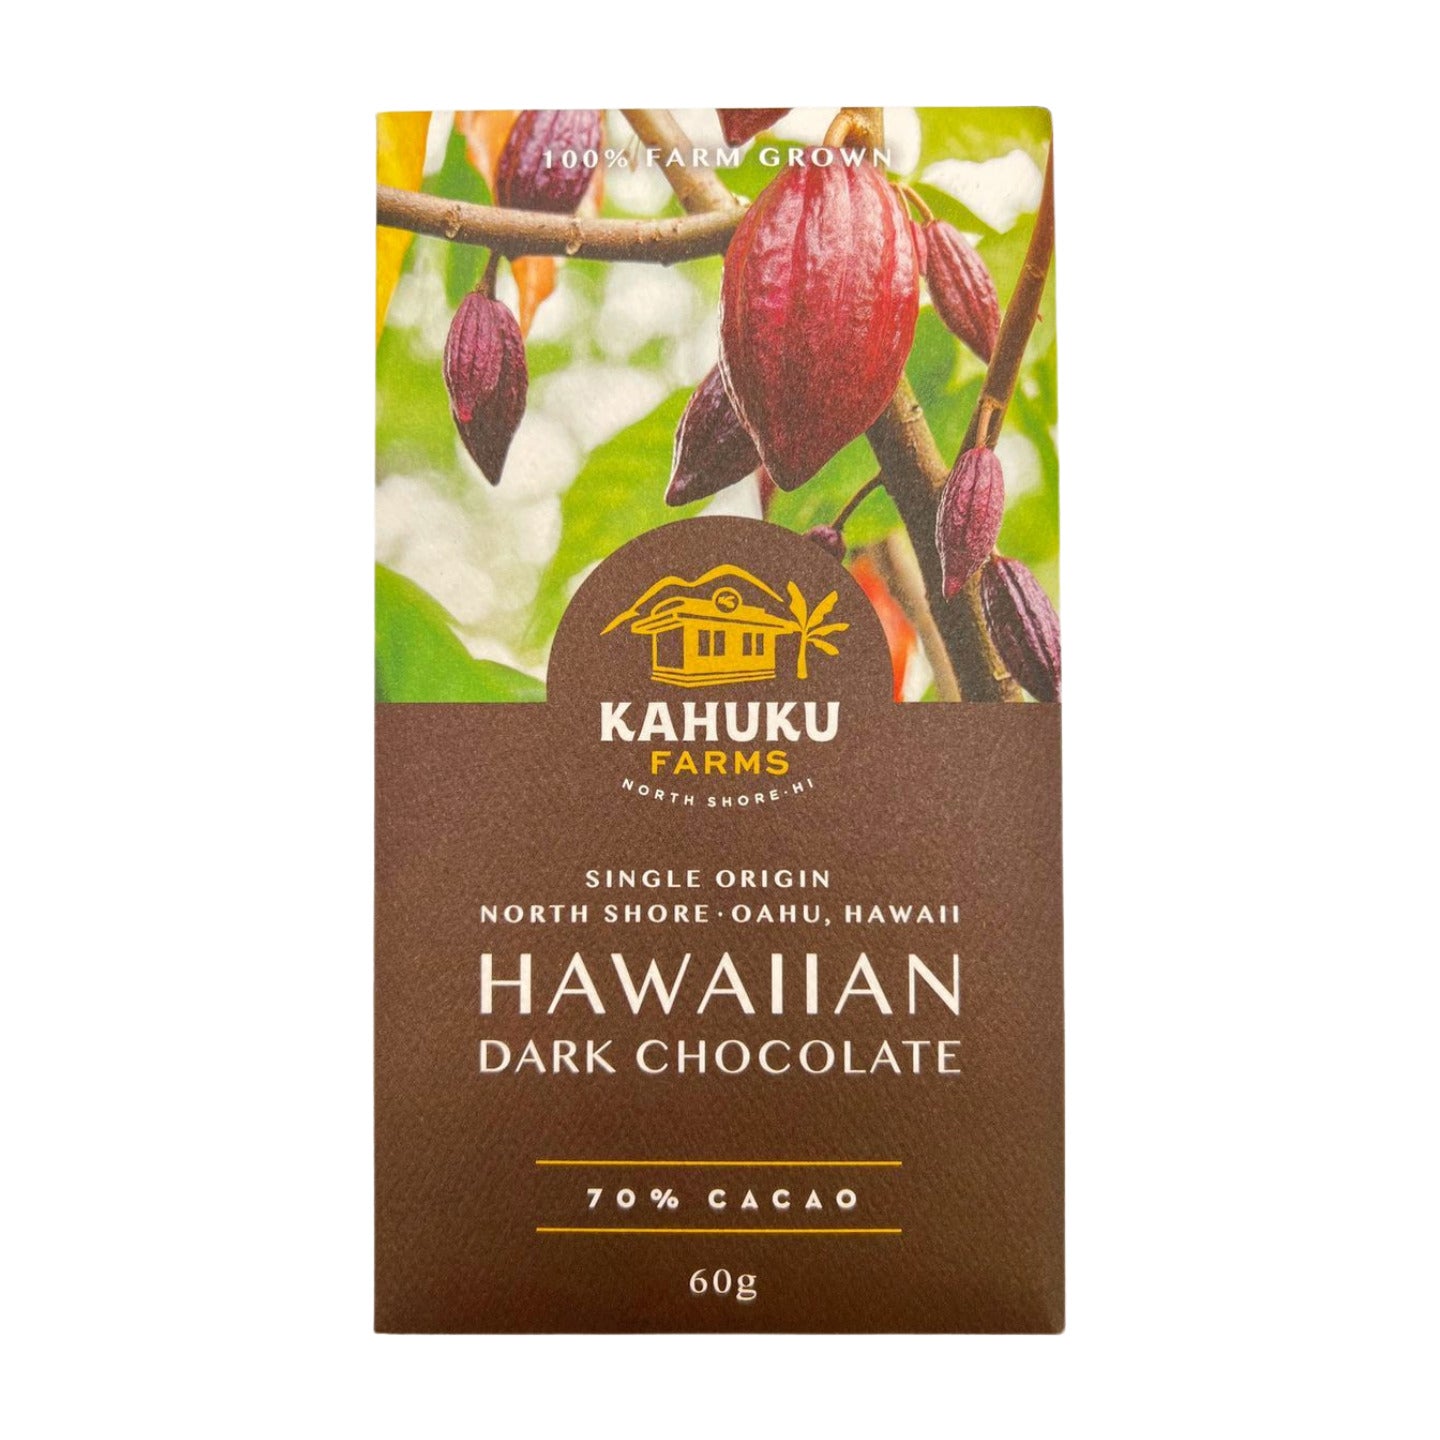 Pop-Up Mākeke - Kahuku Farms - Hawaiian Dark Chocolate (70%) - Front View